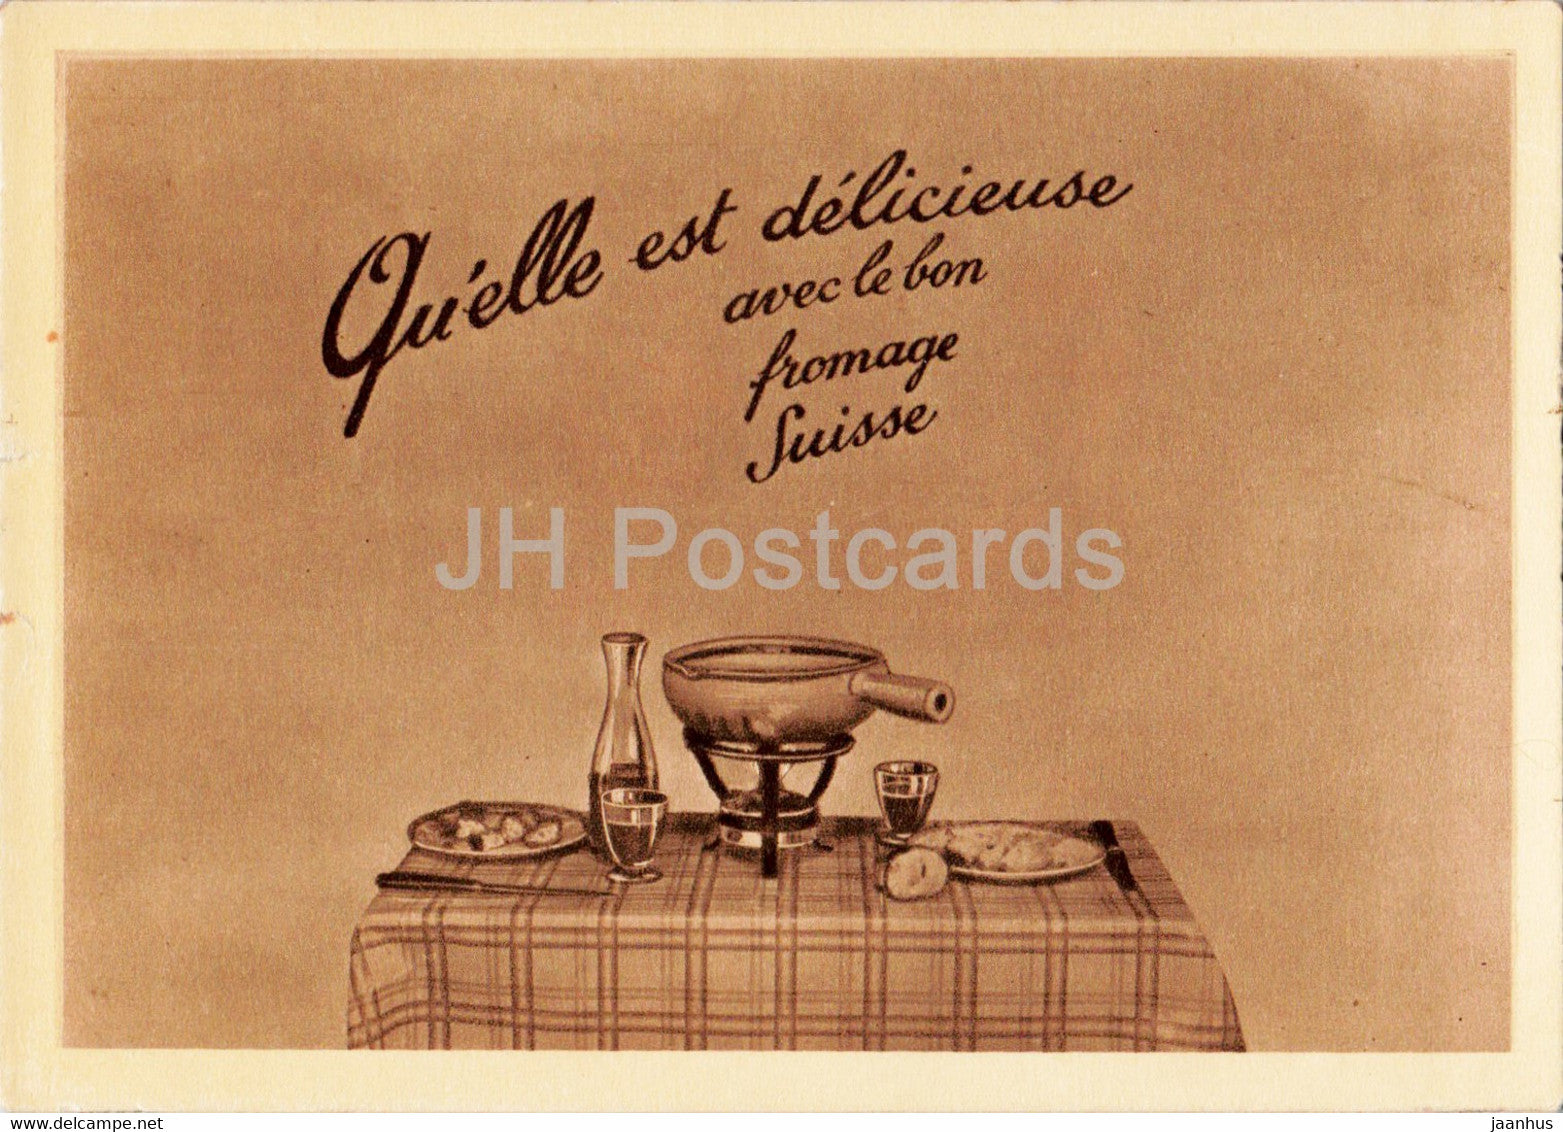 Carte Lumineuse Propaga - Quelle est delicieuse avec le bon fromage Suisse - old postcard - Switzerland - unused - JH Postcards